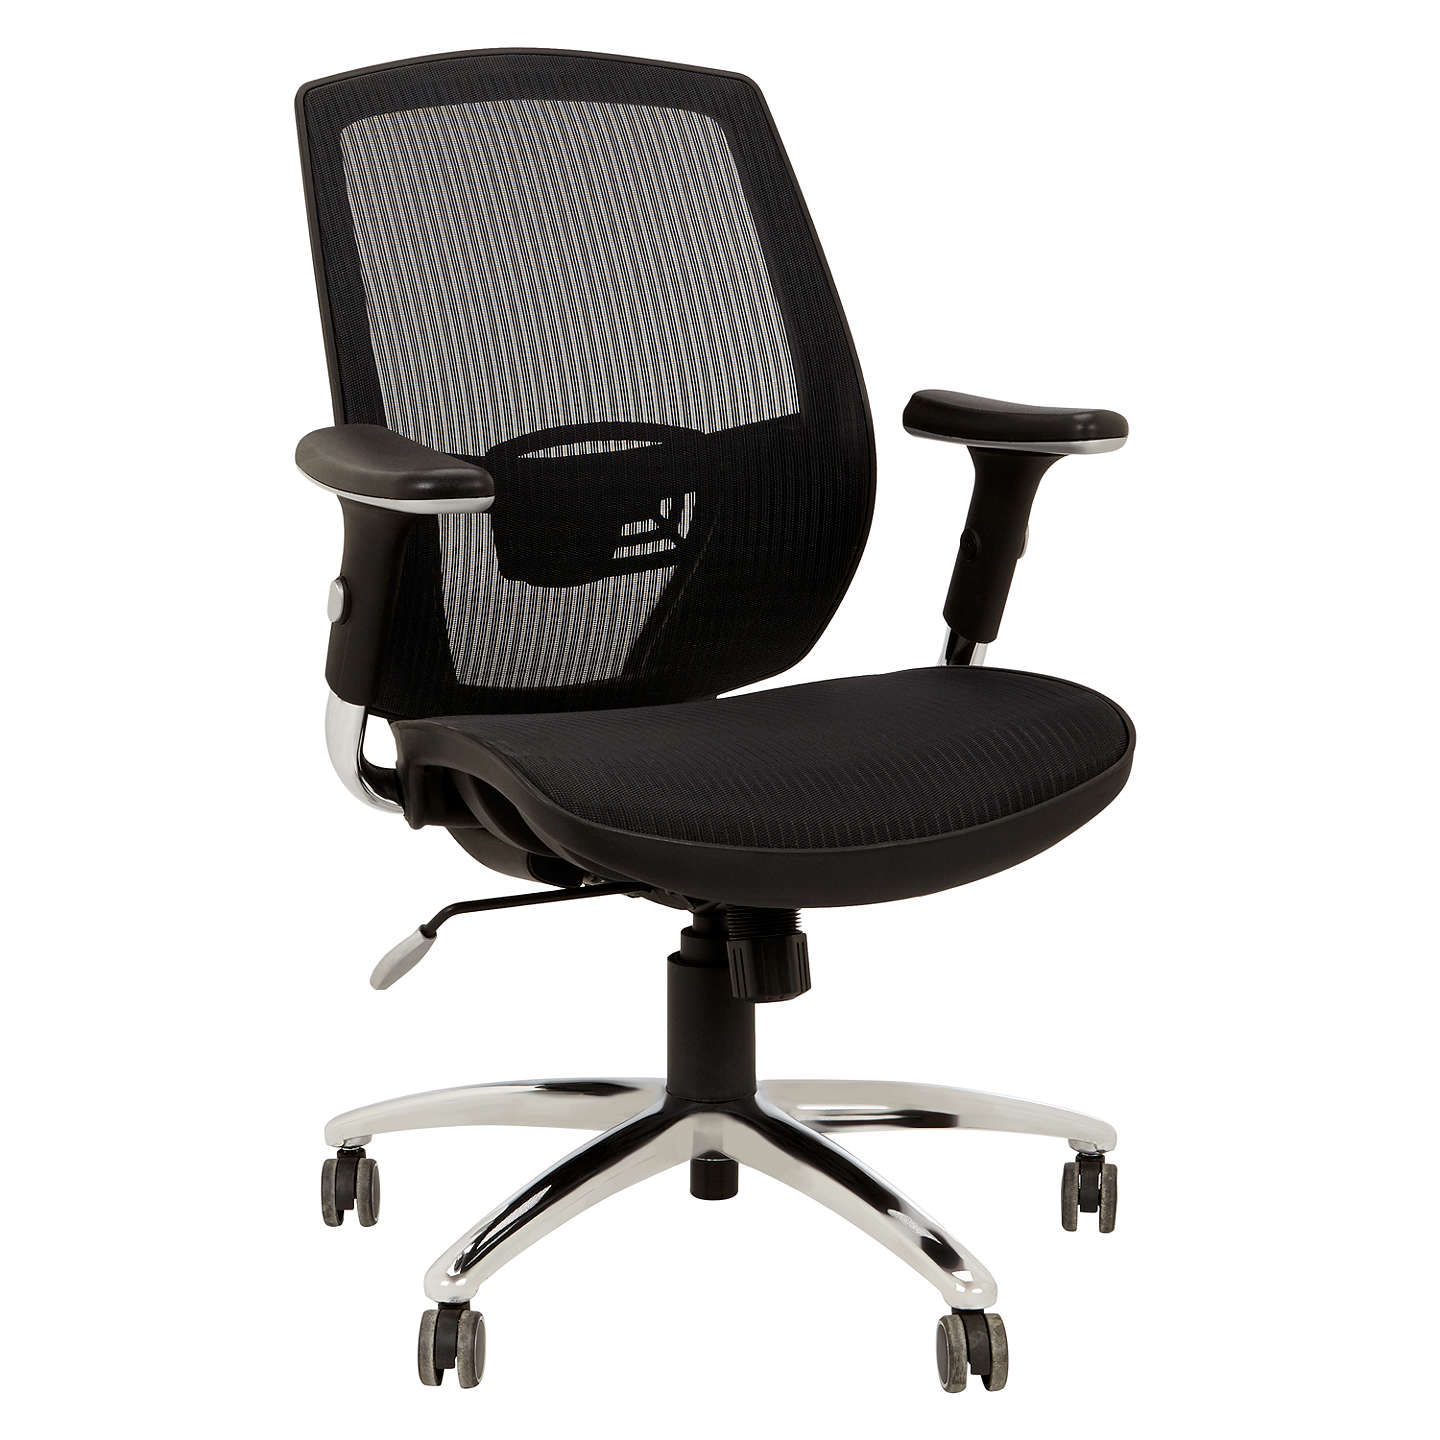 john lewis murray ergonomic office chair, black buy online at johnlewis.com ... FYFGEAG